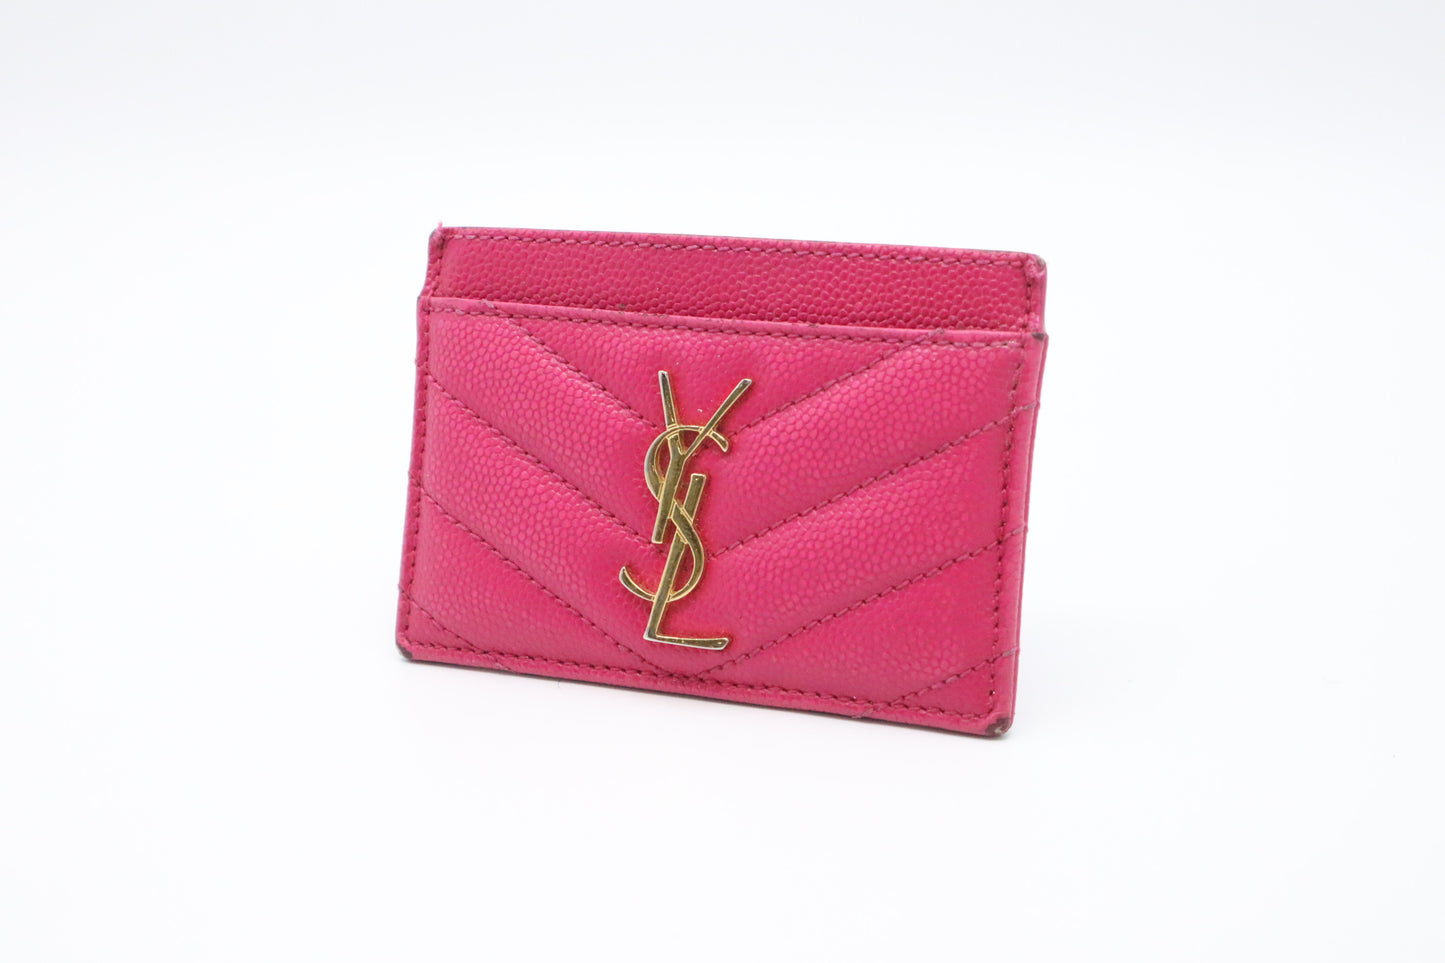 YSL Saint Laurent Card Case in Pink Grain de Poudre Embossed Leather